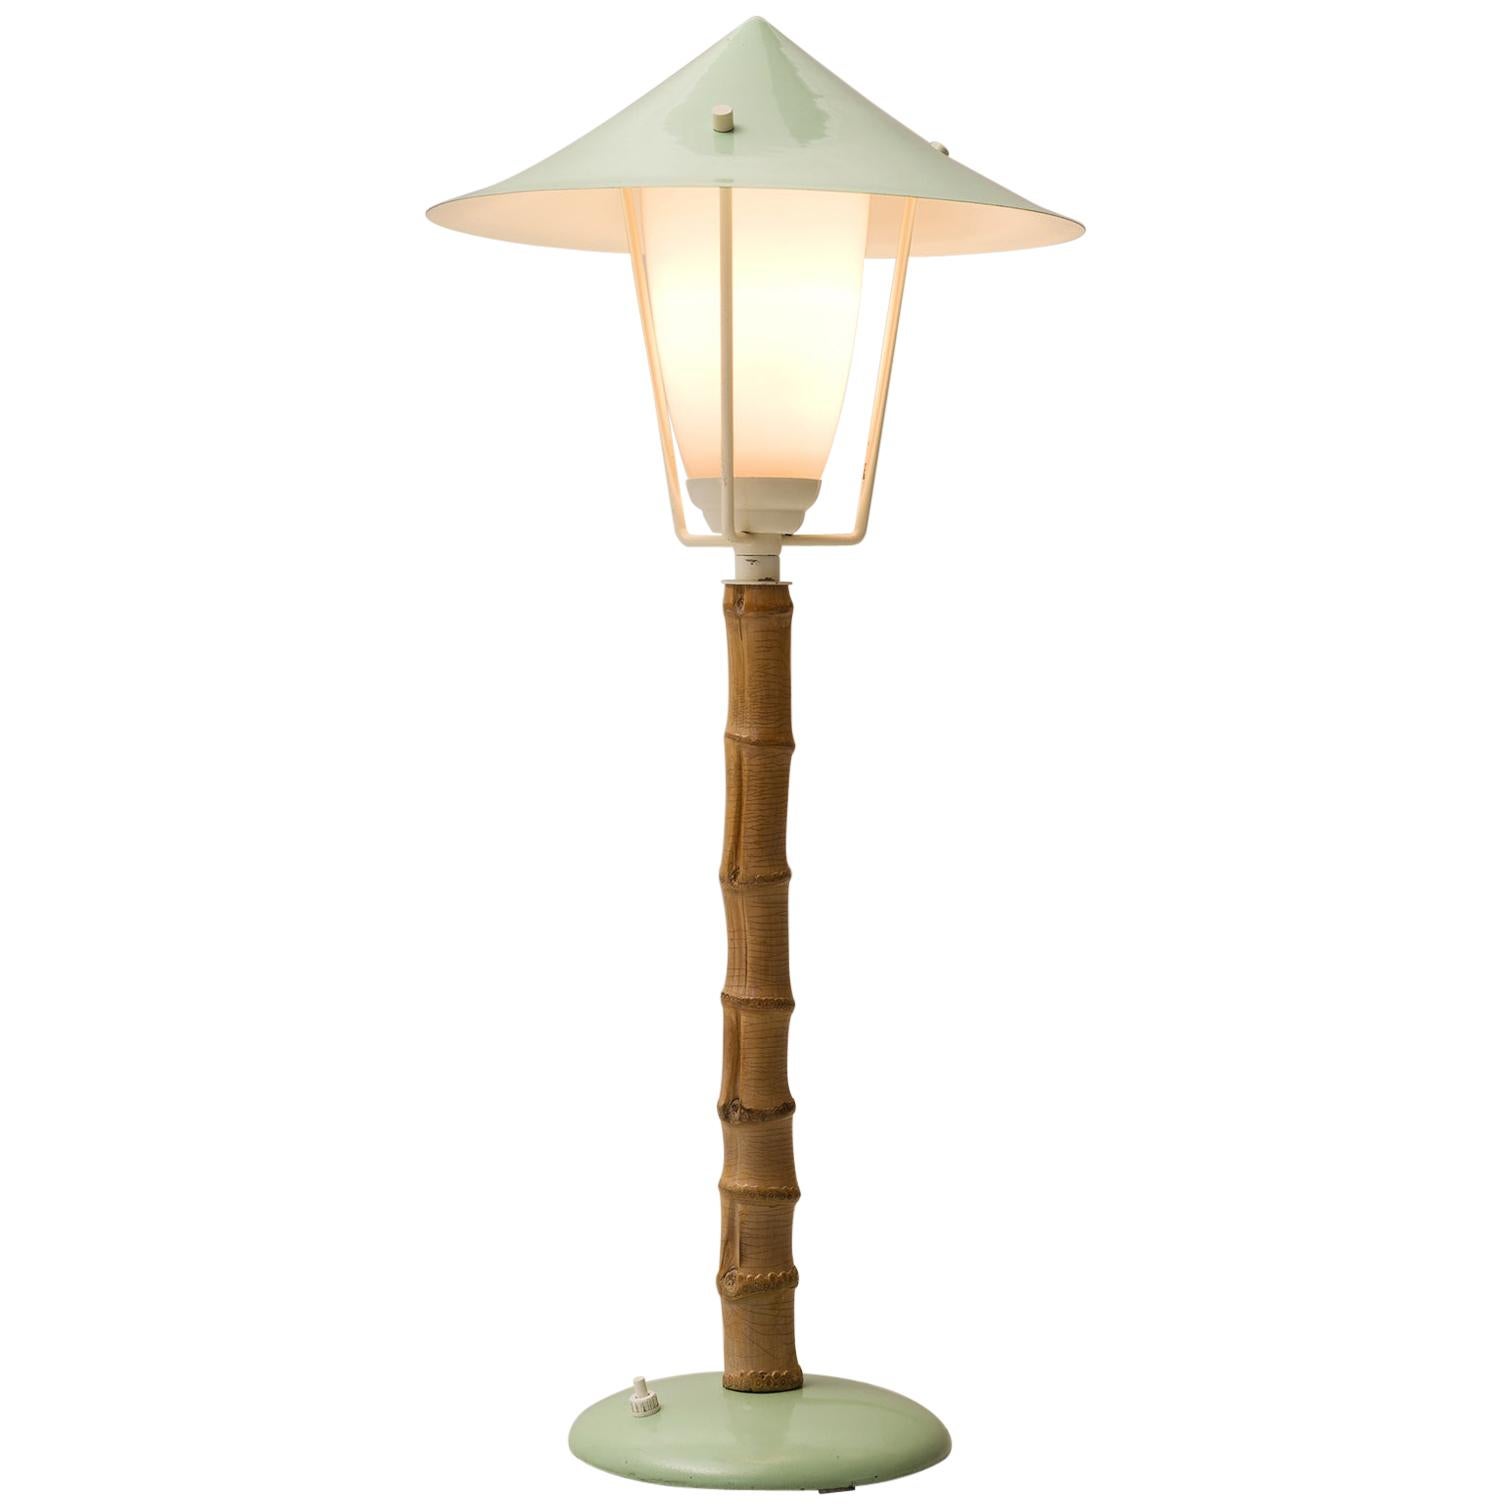 J.T. Kalmar 'Karla' Bamboo Green Table Lamp, 1950s